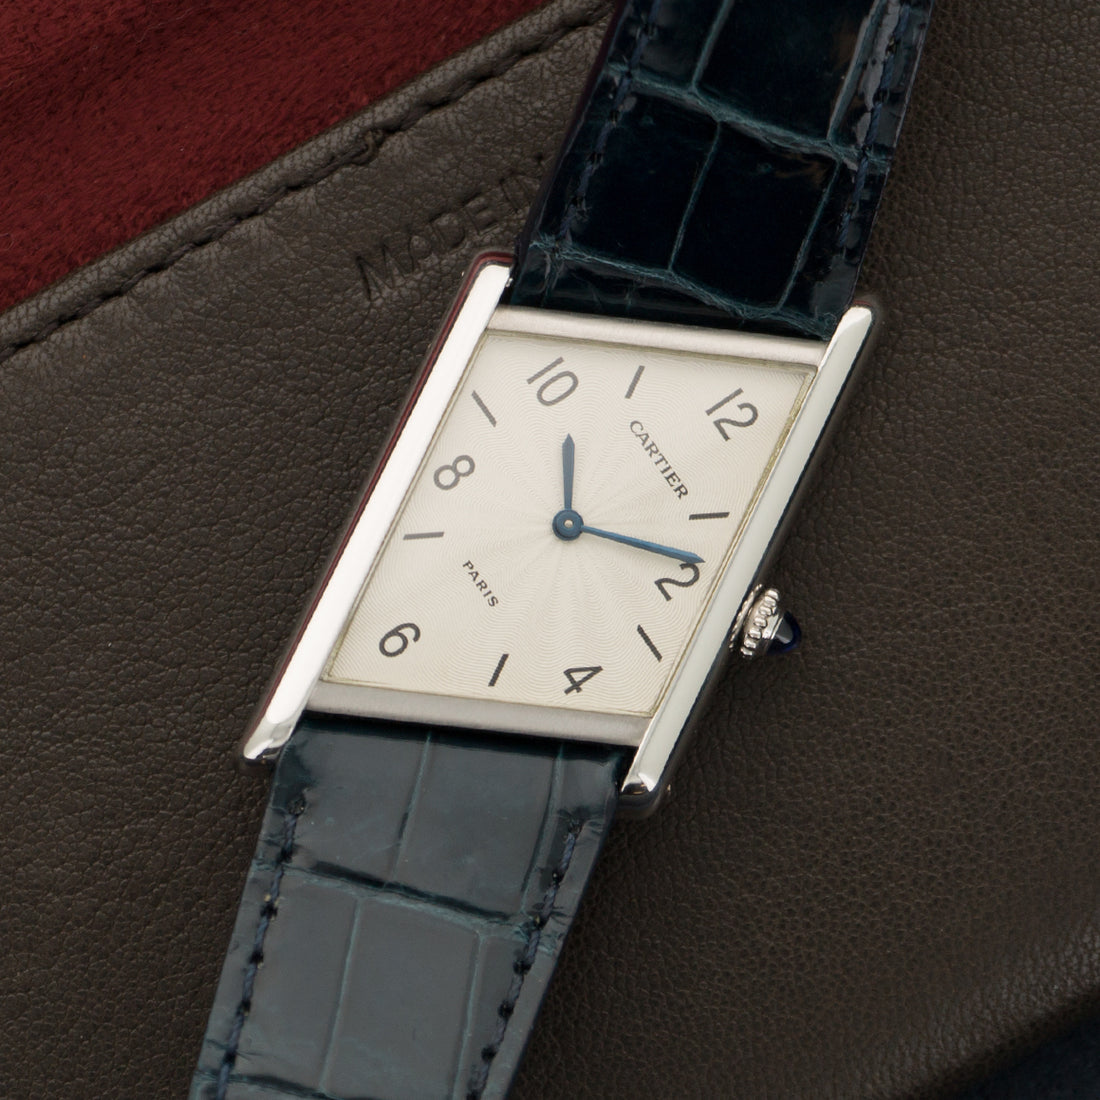 Cartier Platinum Asymmetric Tank Limited Edition Watch, Ref. 2488